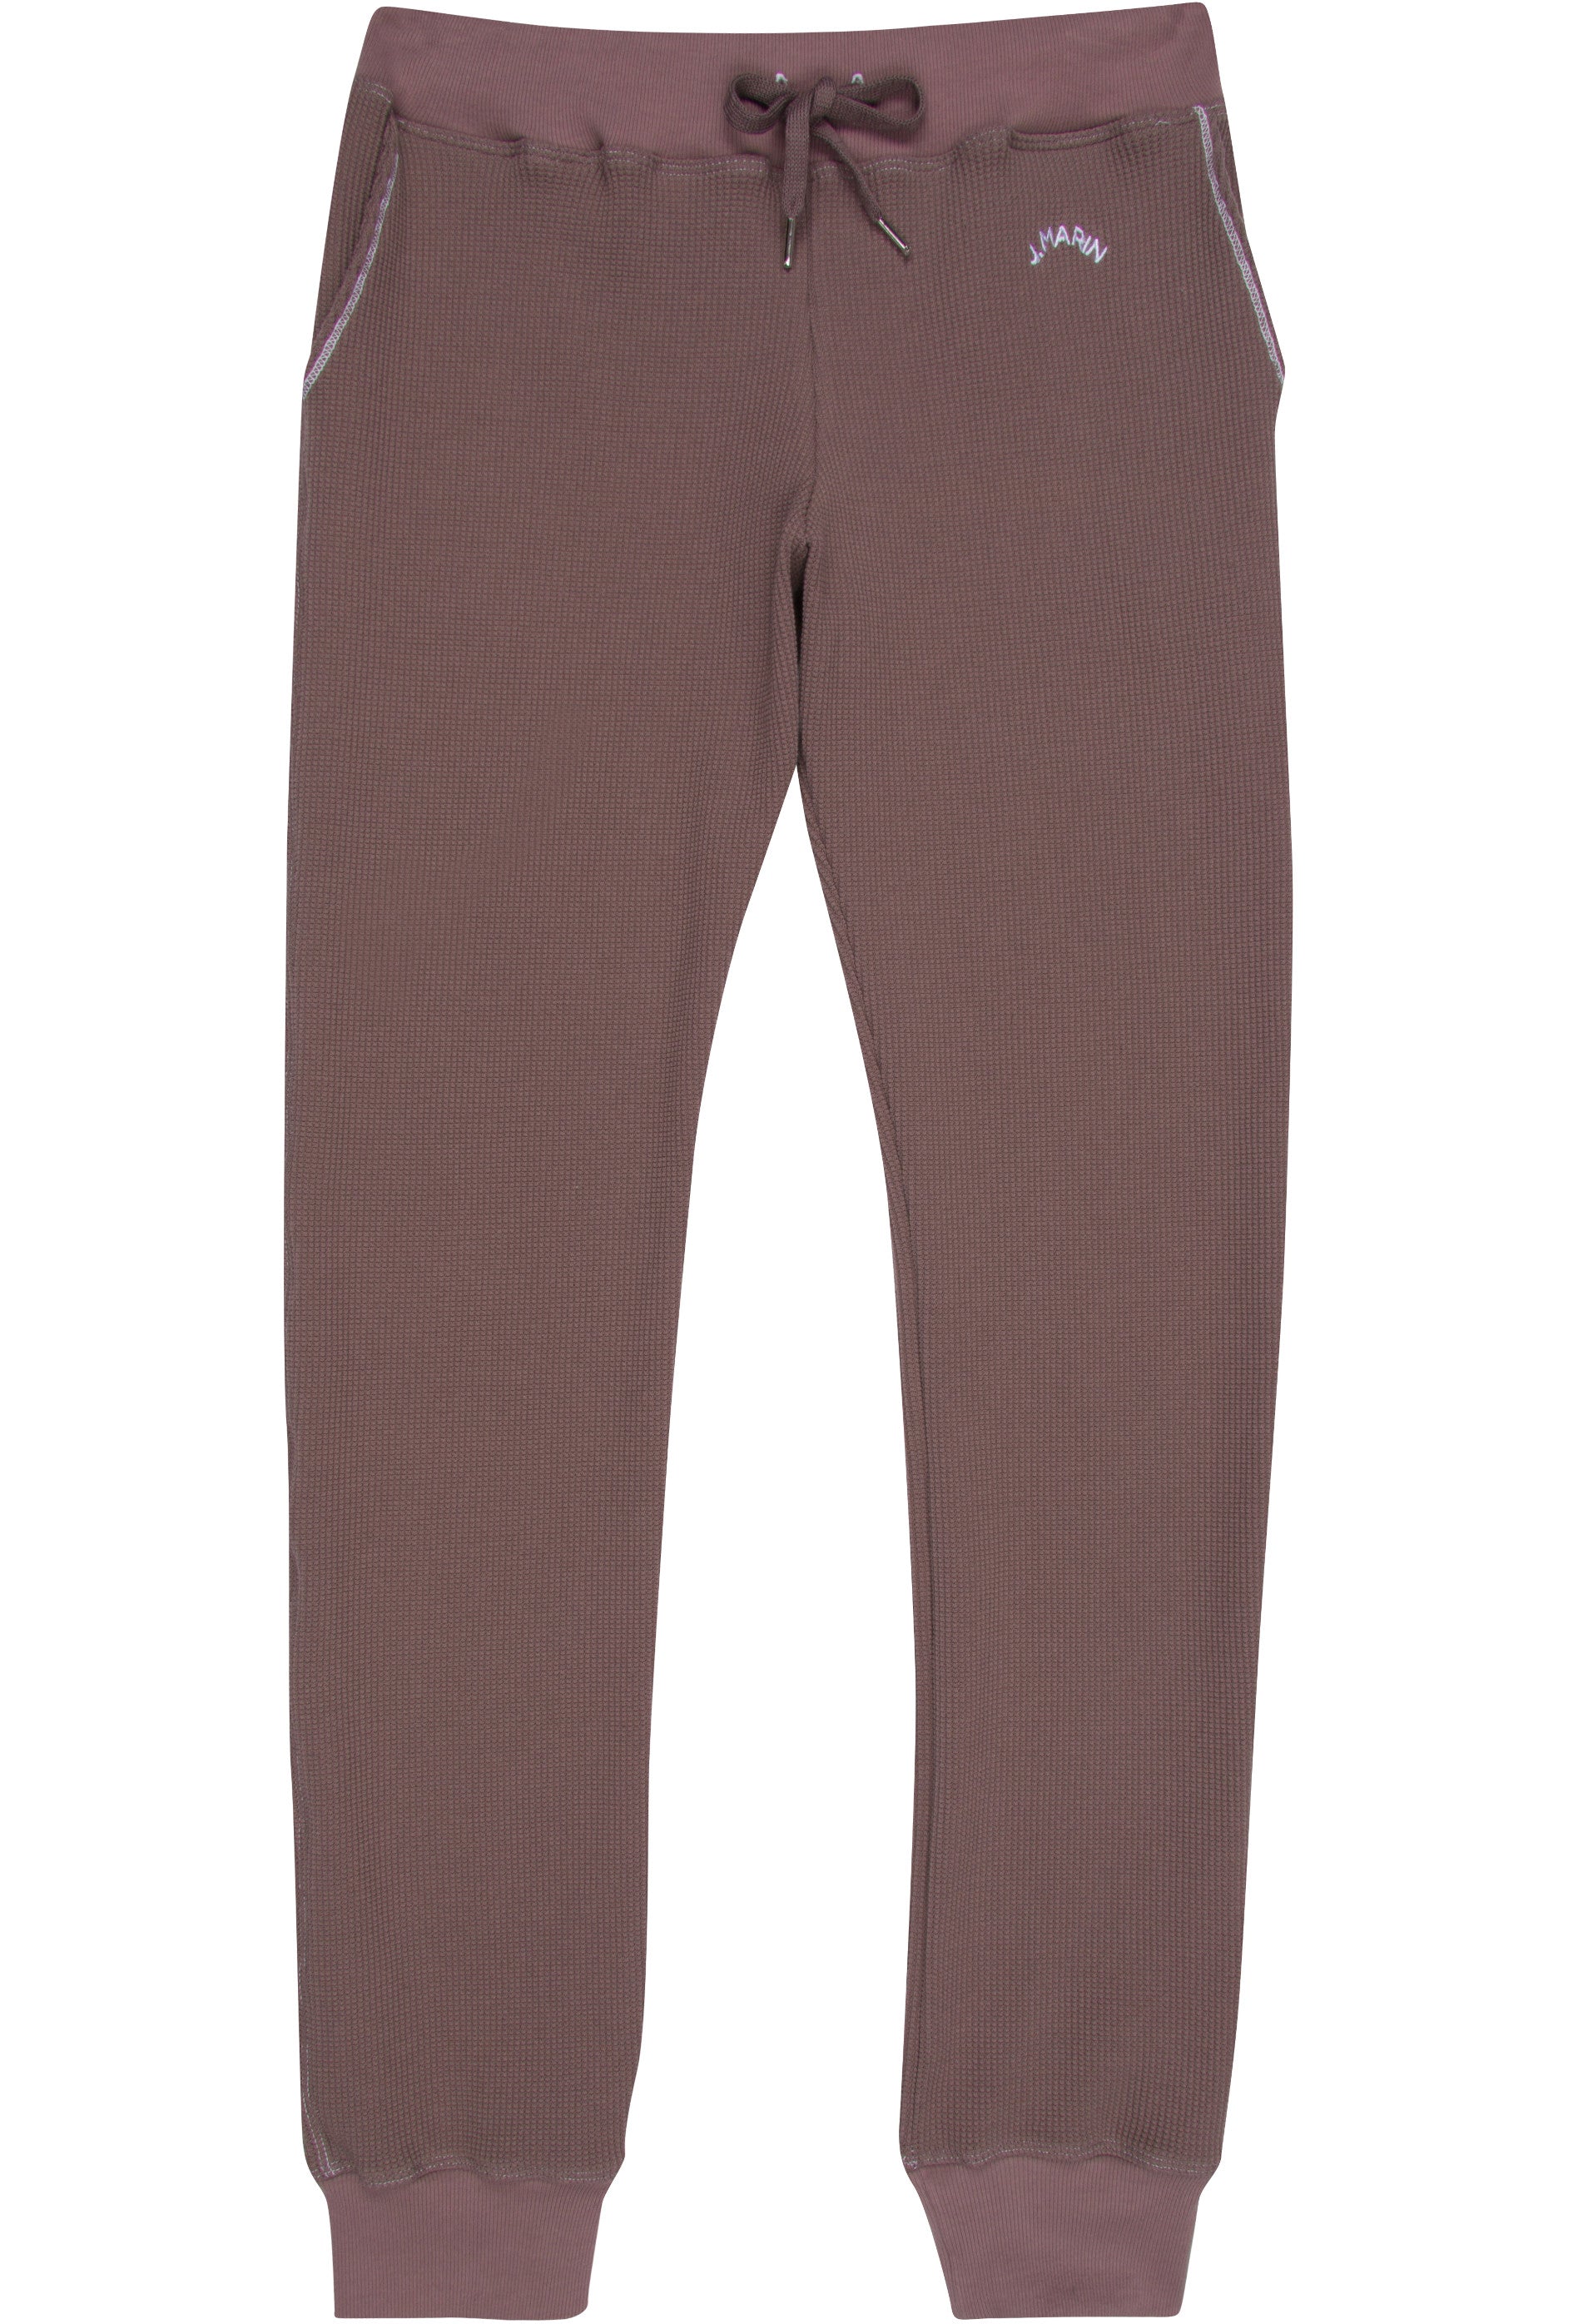 Retro Classic Long Organic Thermal Jogger Sweatpants - Chocolate Brown - J. Marin